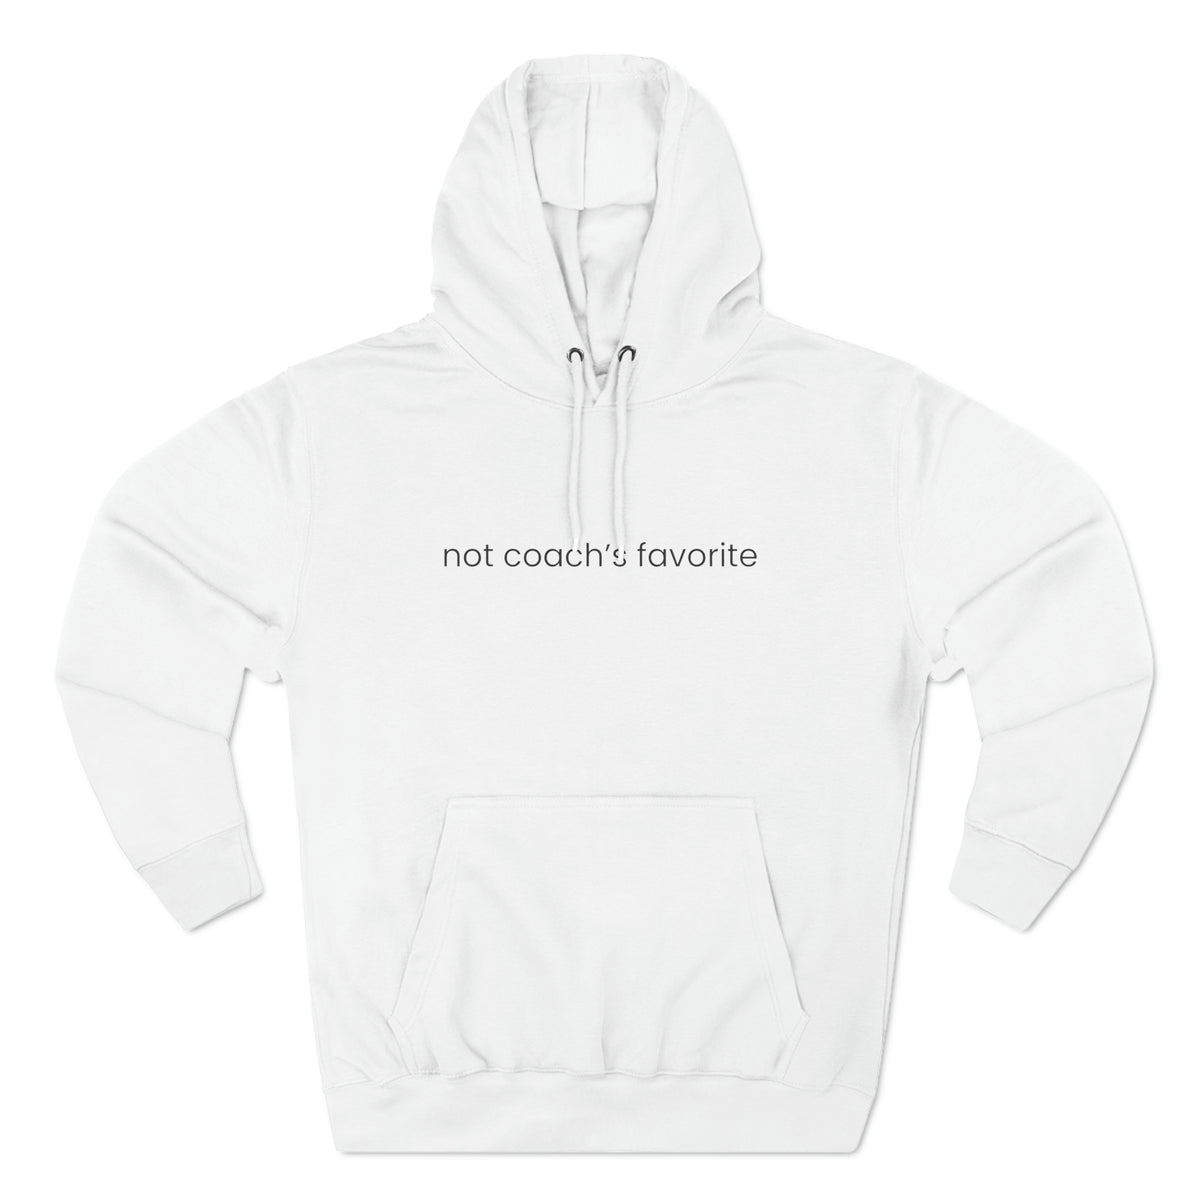 Not Coach's Favorite Adult Hooded Sweatshirt